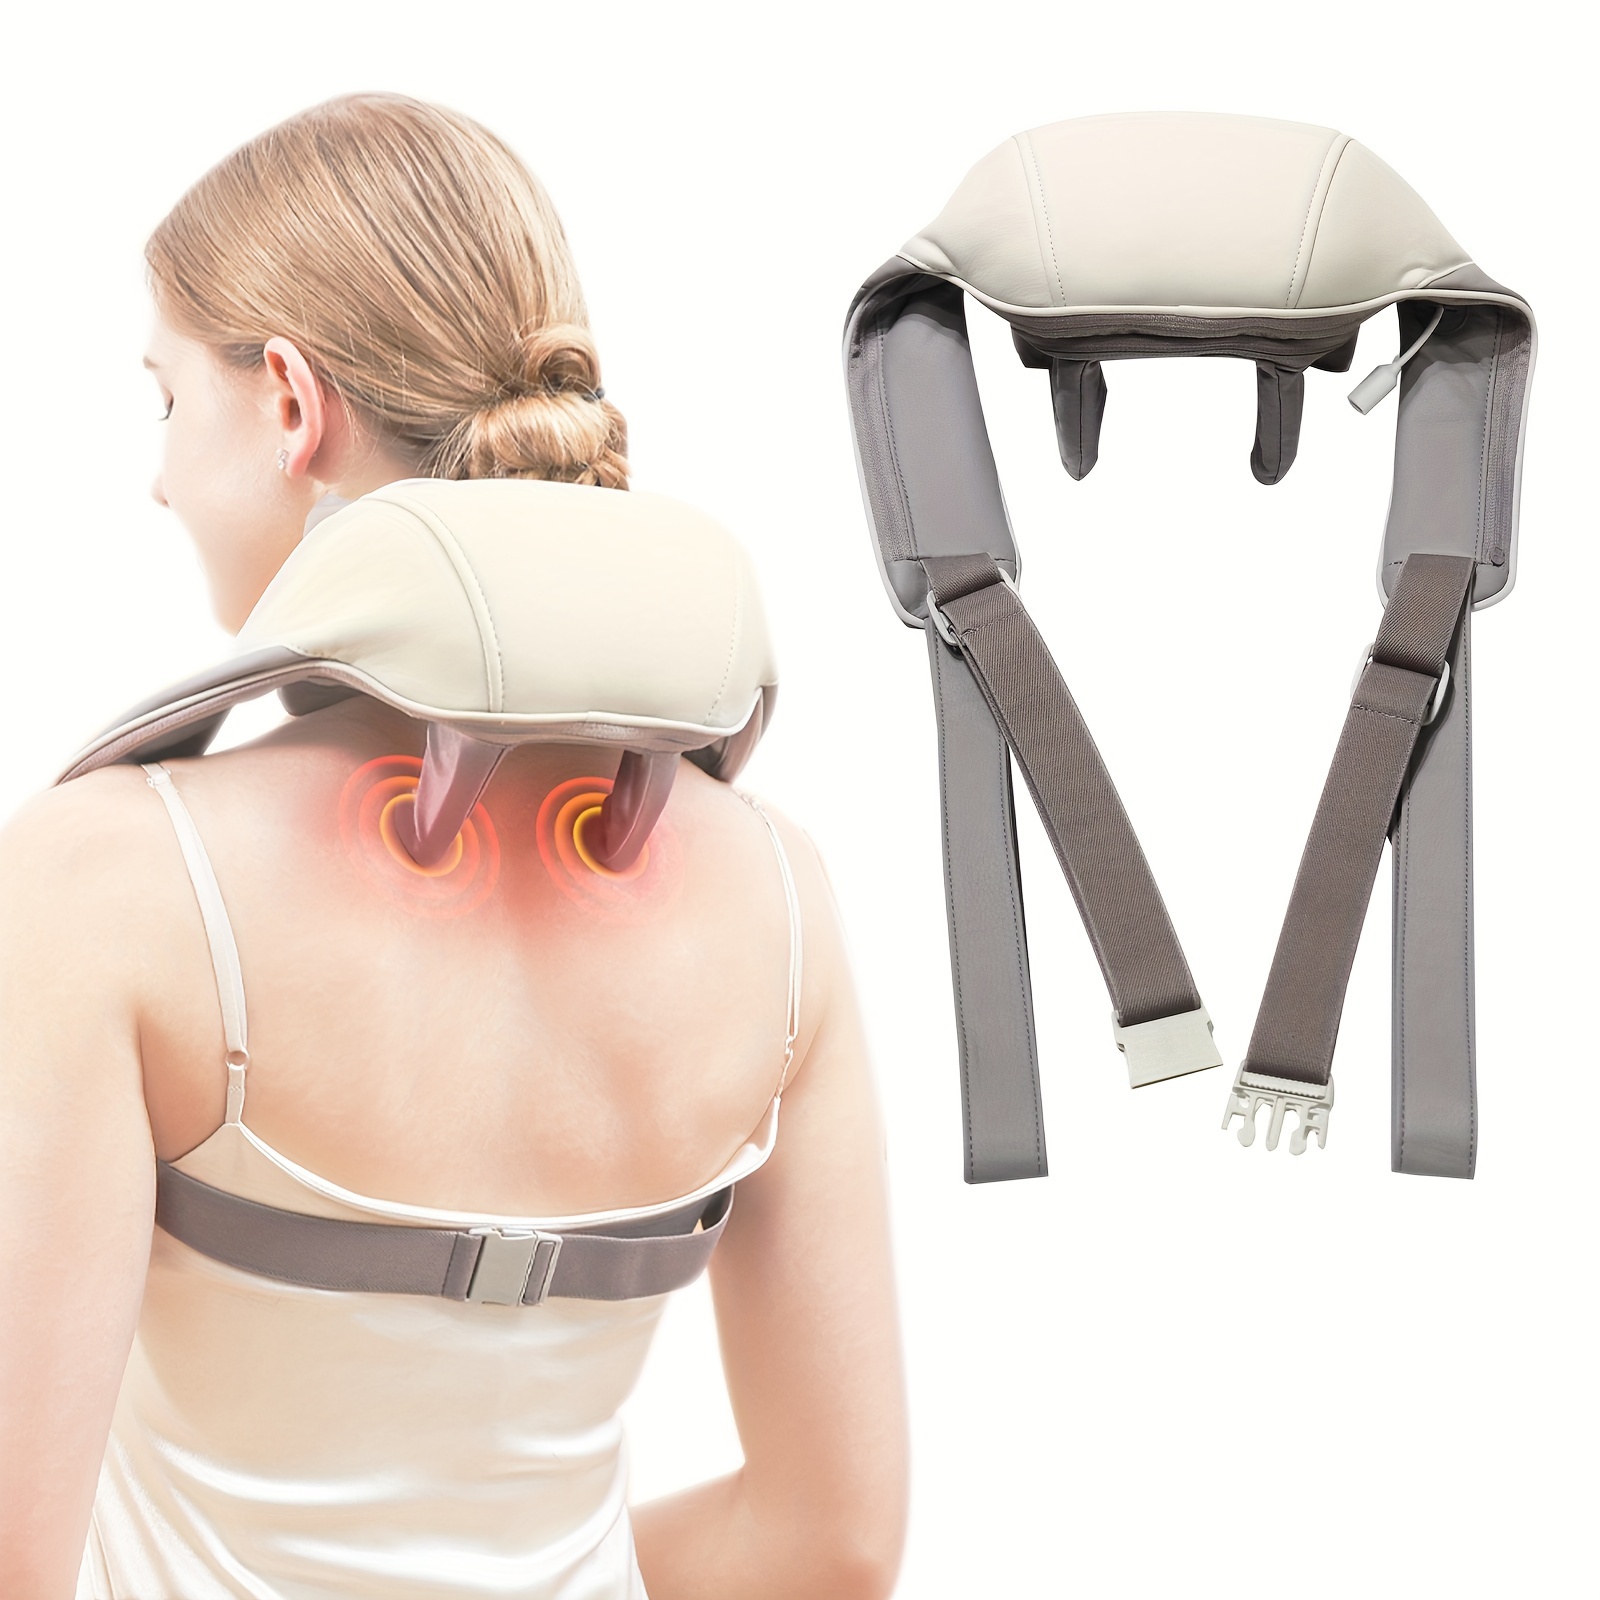 Intelligent Neck Massager Remote Control - The Natural Posture